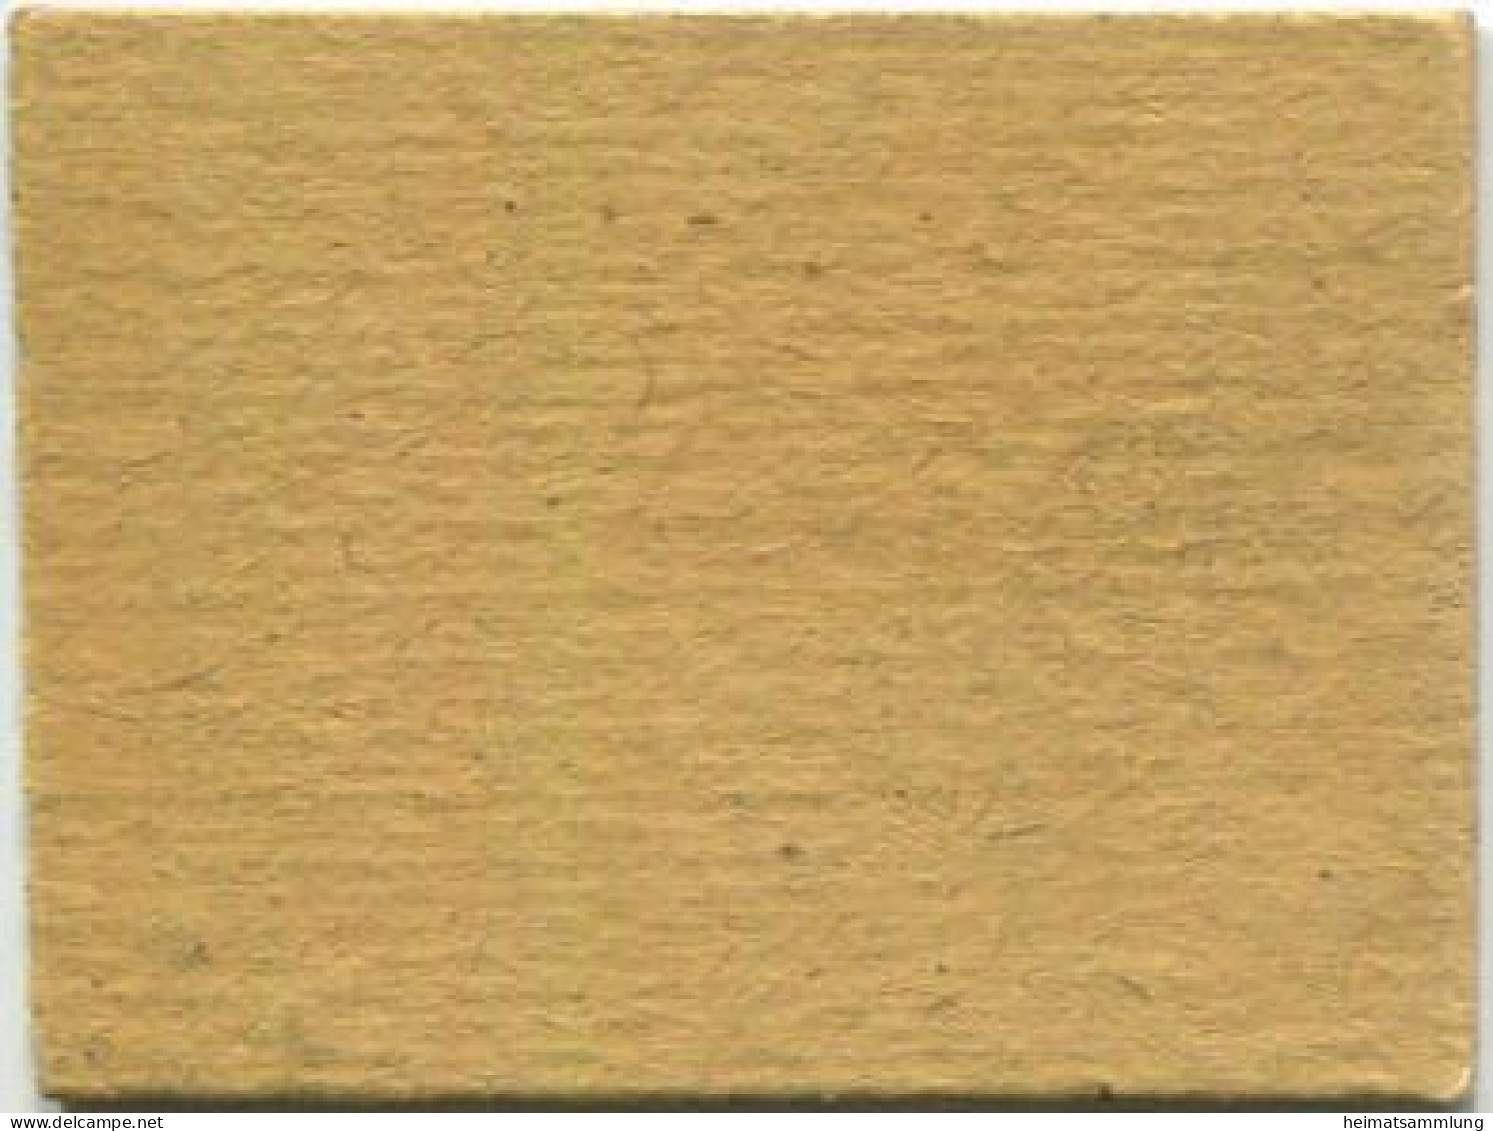 Polen - Lissa I. P. - Posen - Fahrkarte III. Cl 2,8 M 10.1.84 - Europe